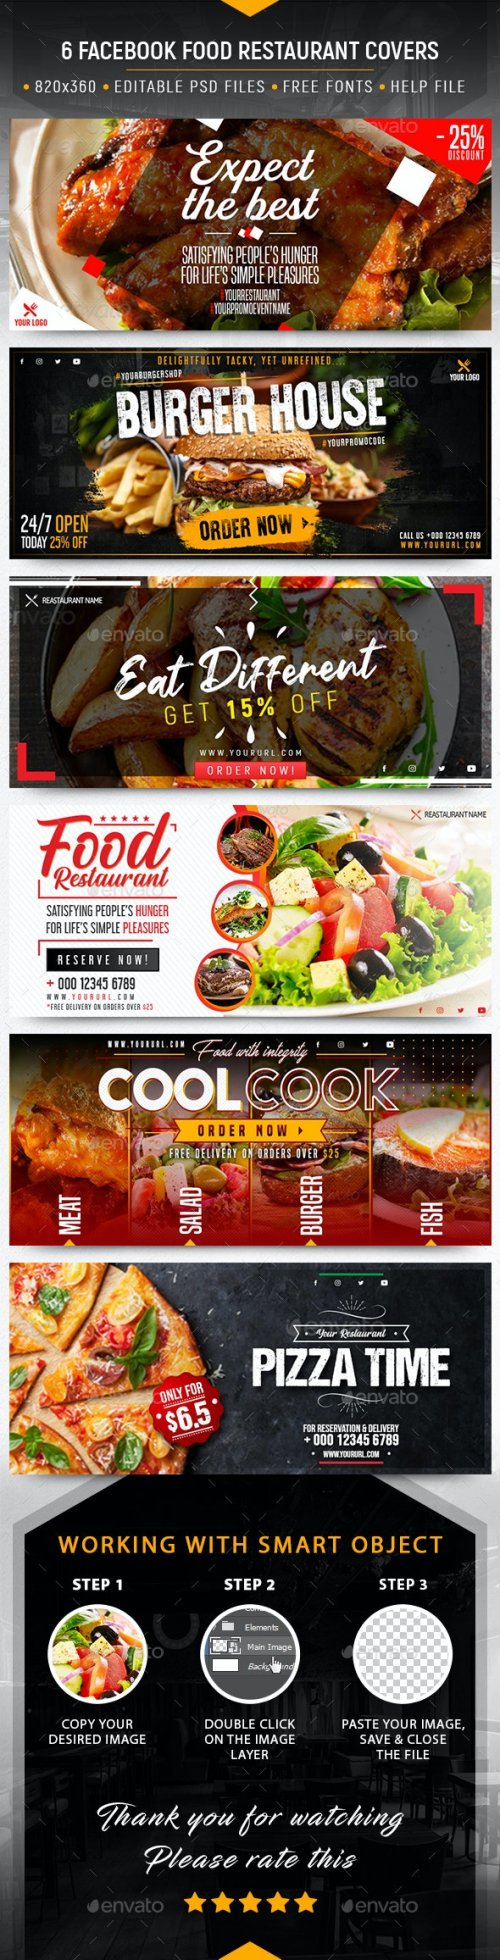 Facebook Food Restaurant Covers 28297750